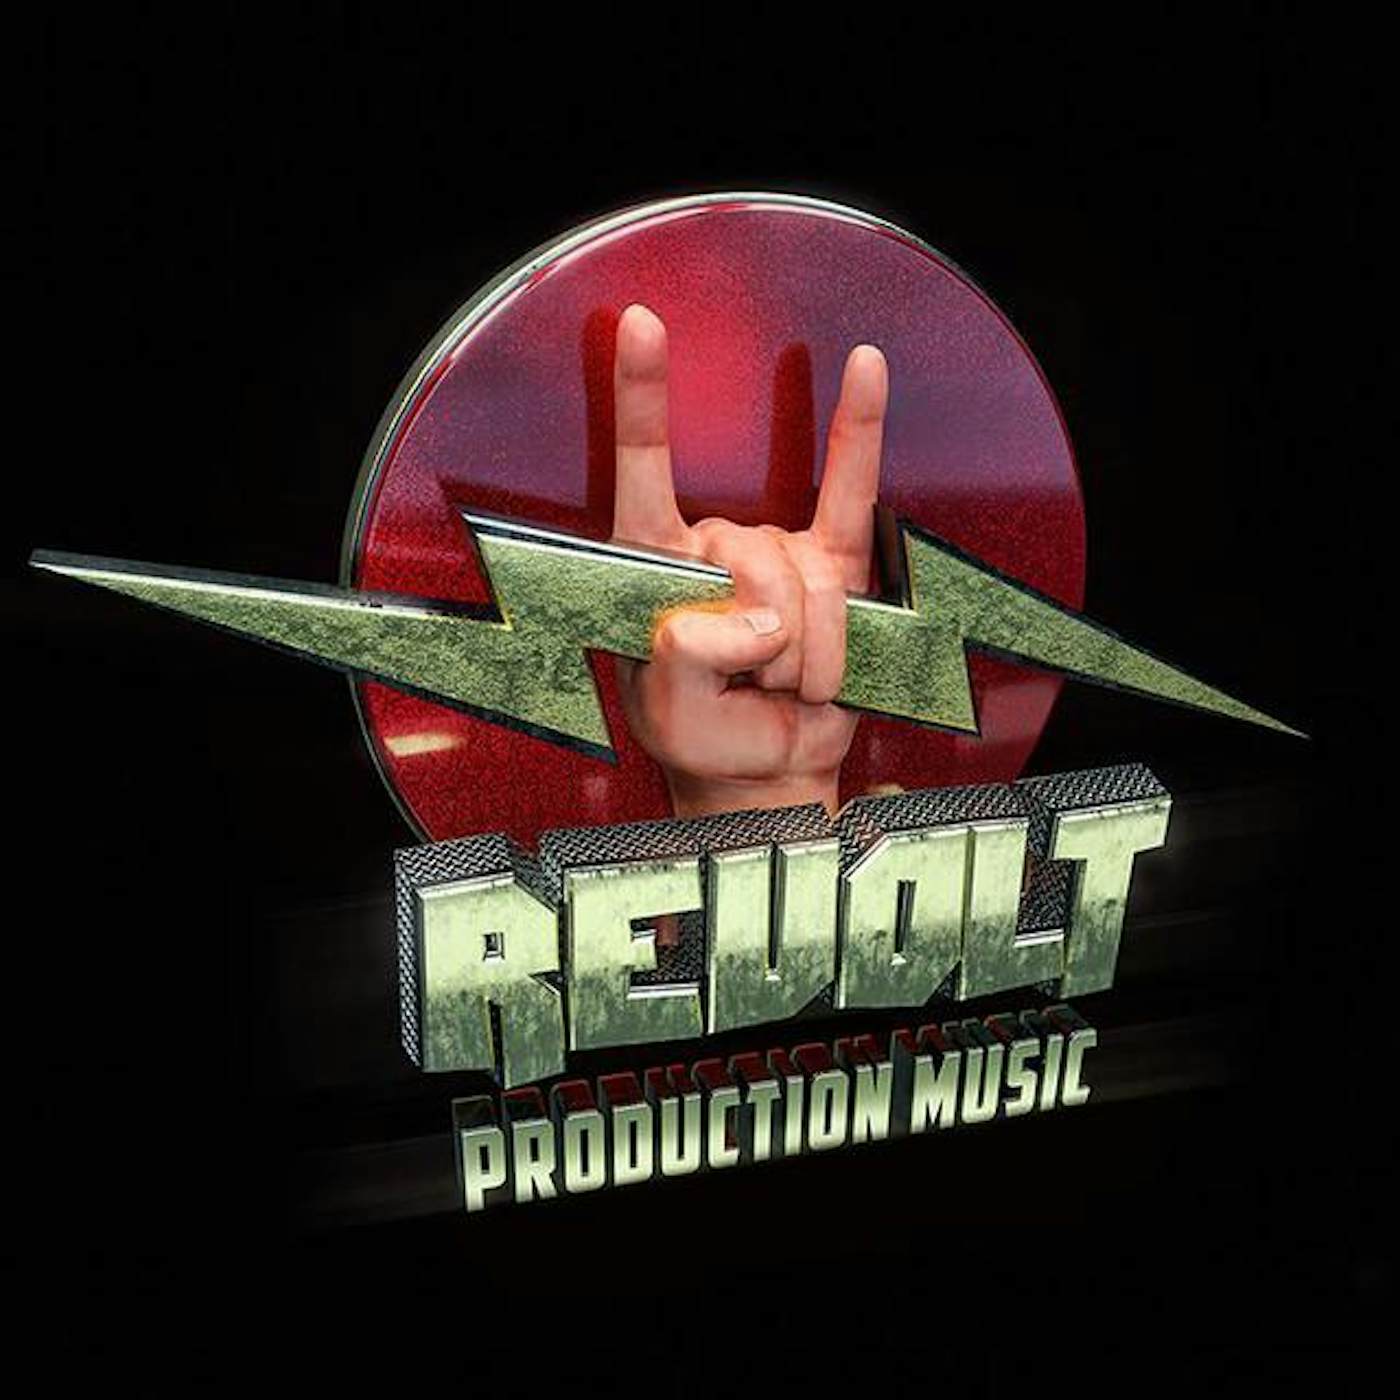 Revolt Production Music